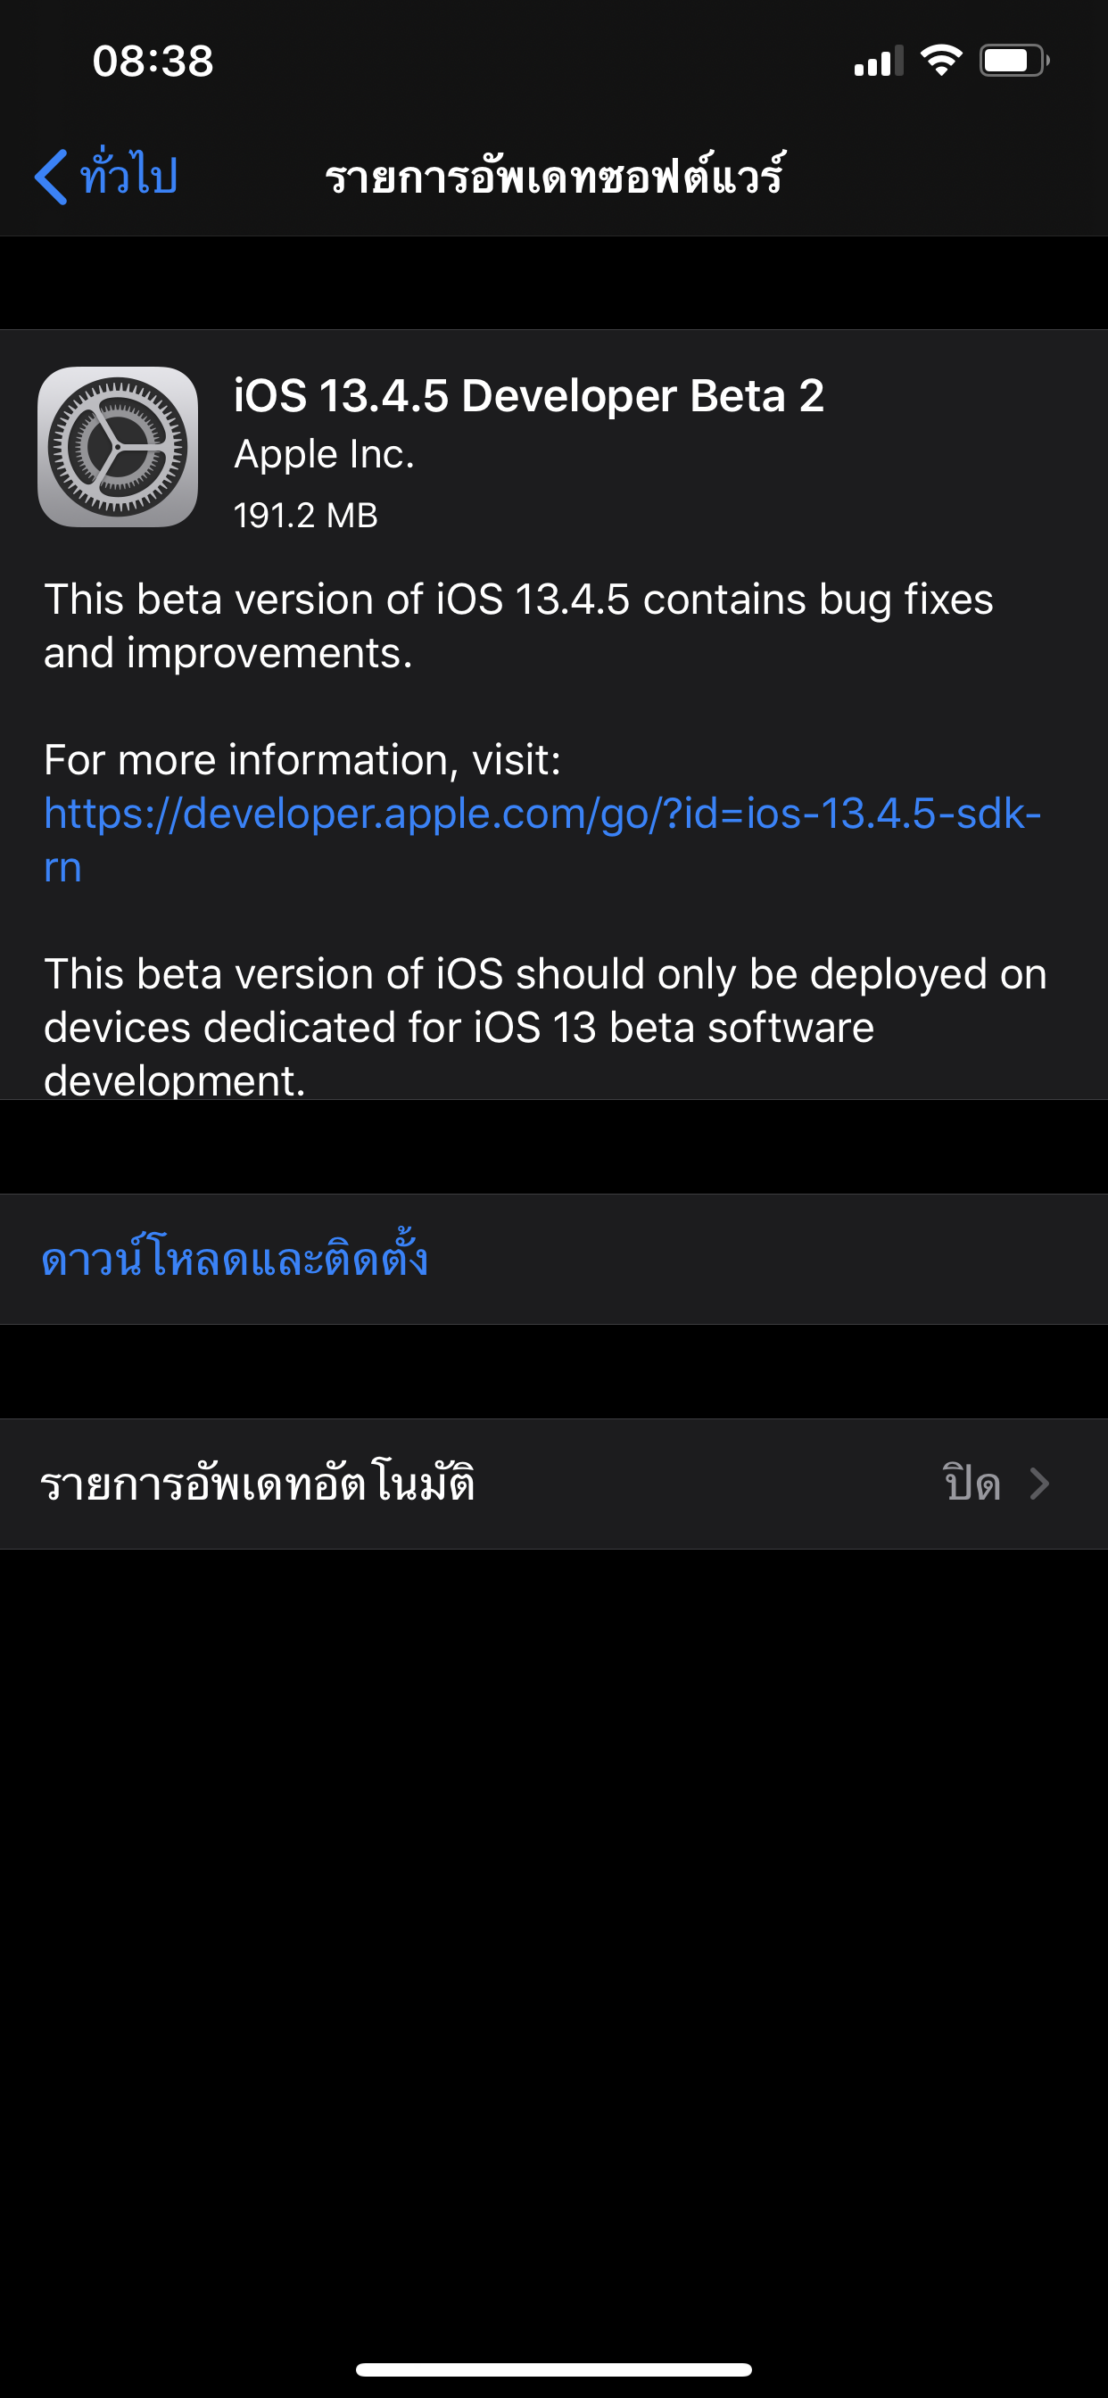 IsMyHdOK 3.93 for apple instal